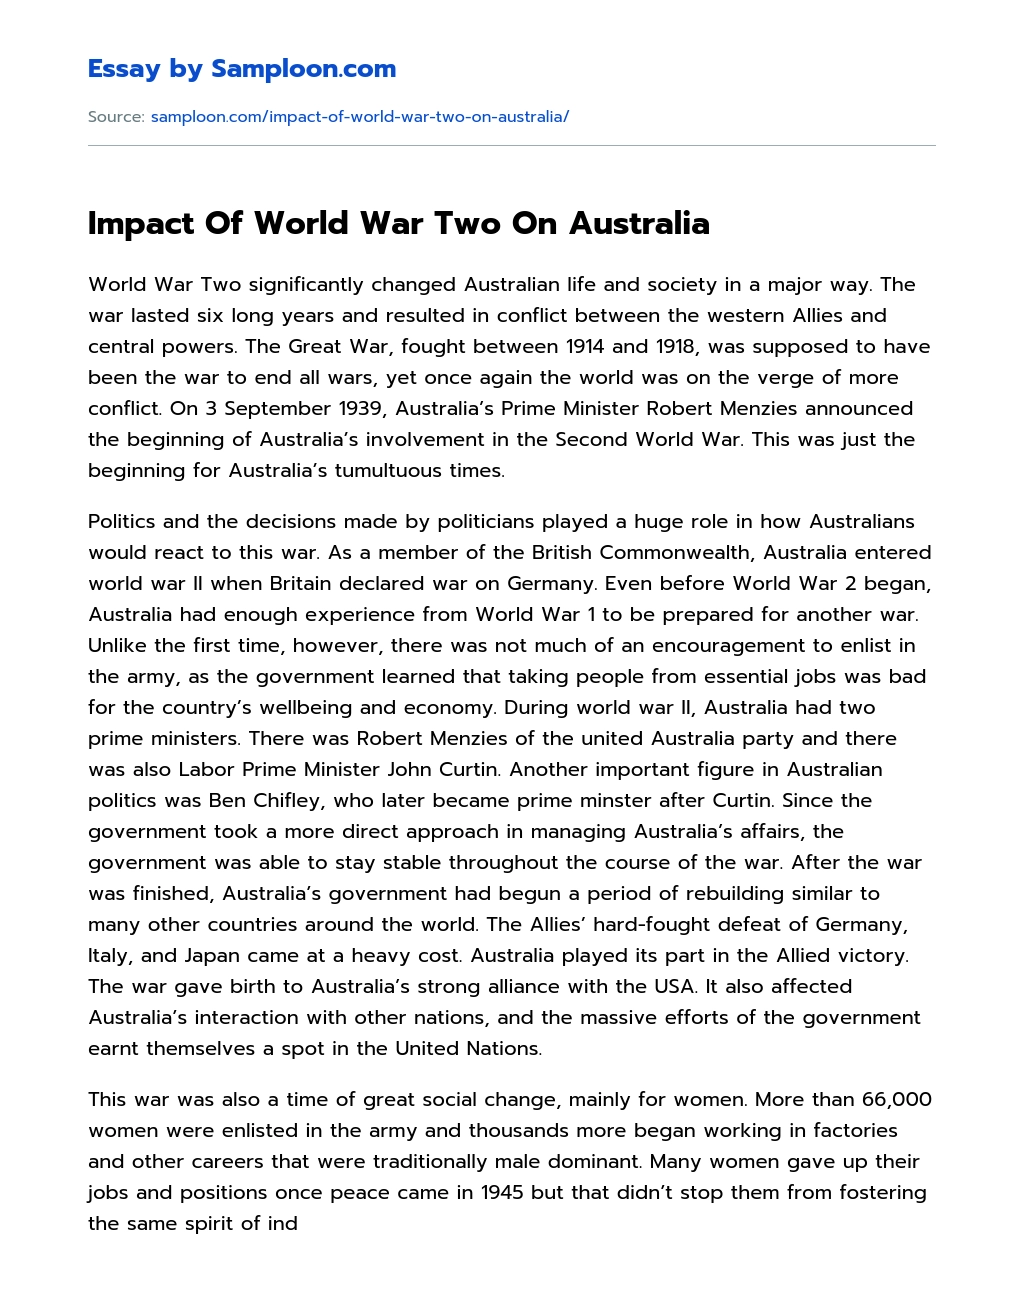 Impact Of World War Two On Australia essay